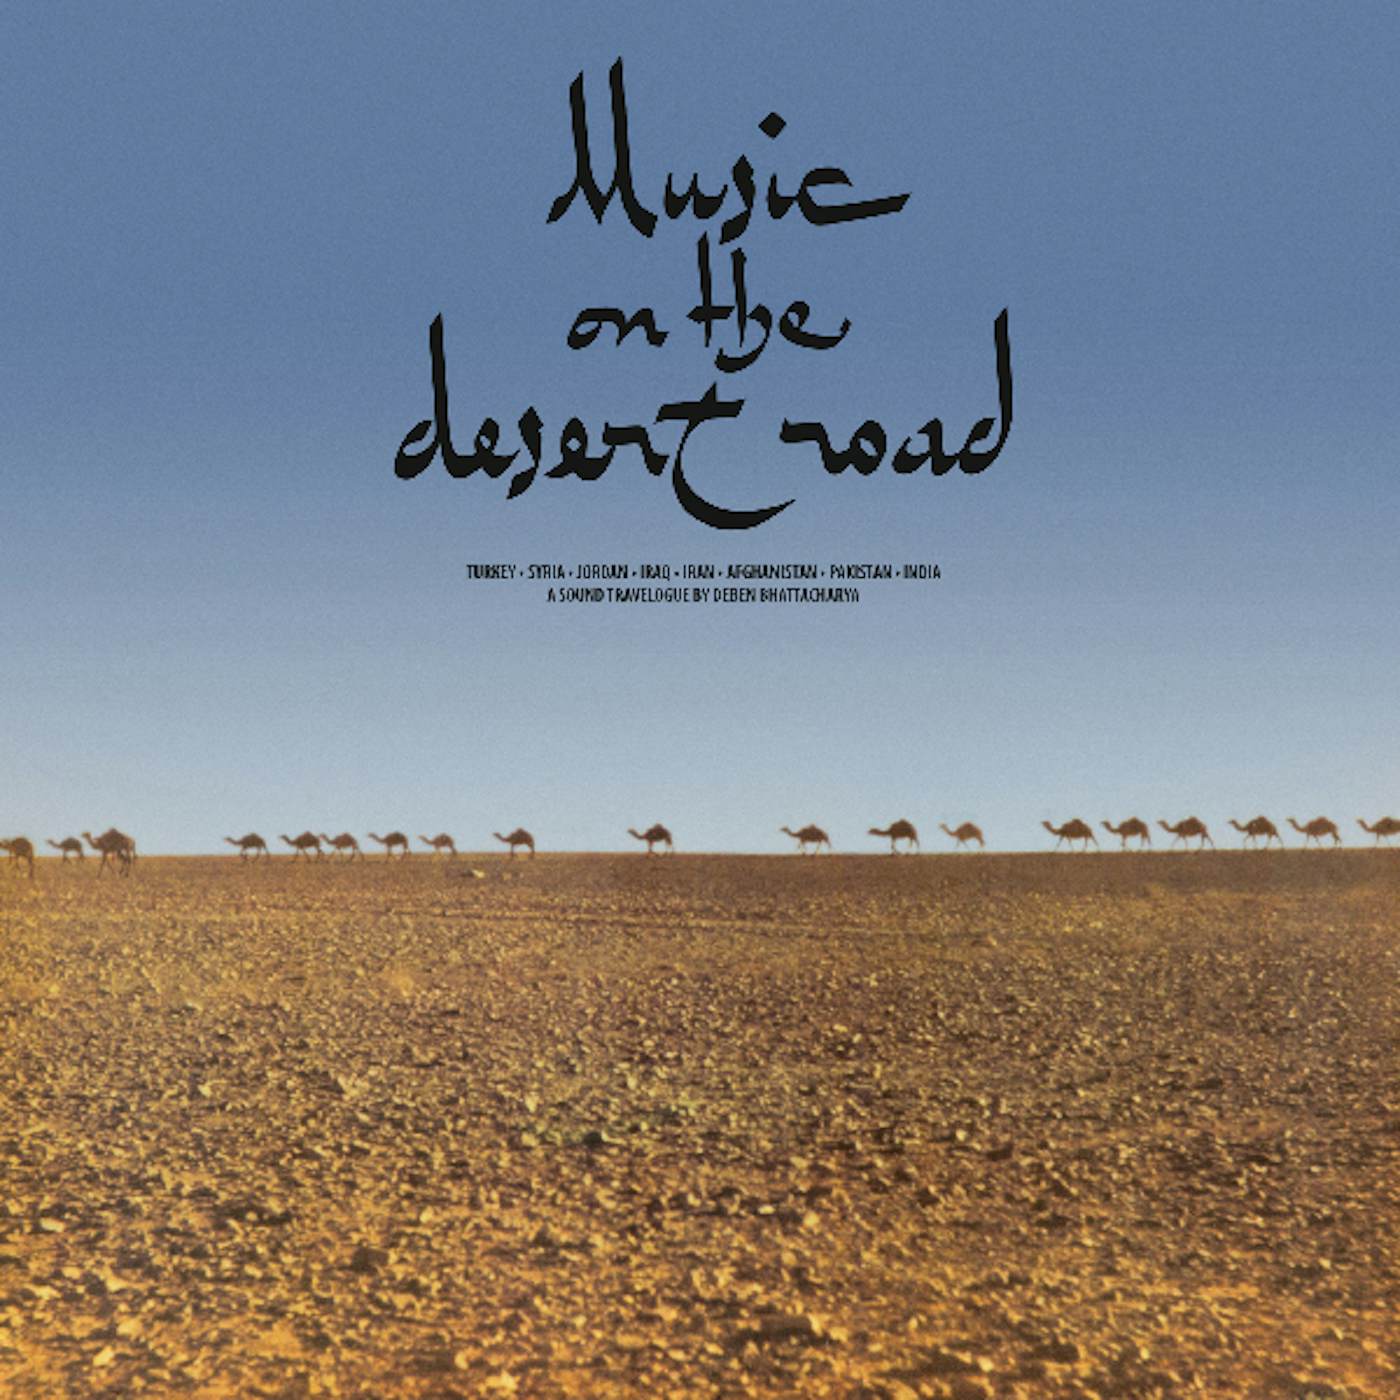 Deben Bhattacharya MUSIC ON THE DESERT ROAD Vinyl Record